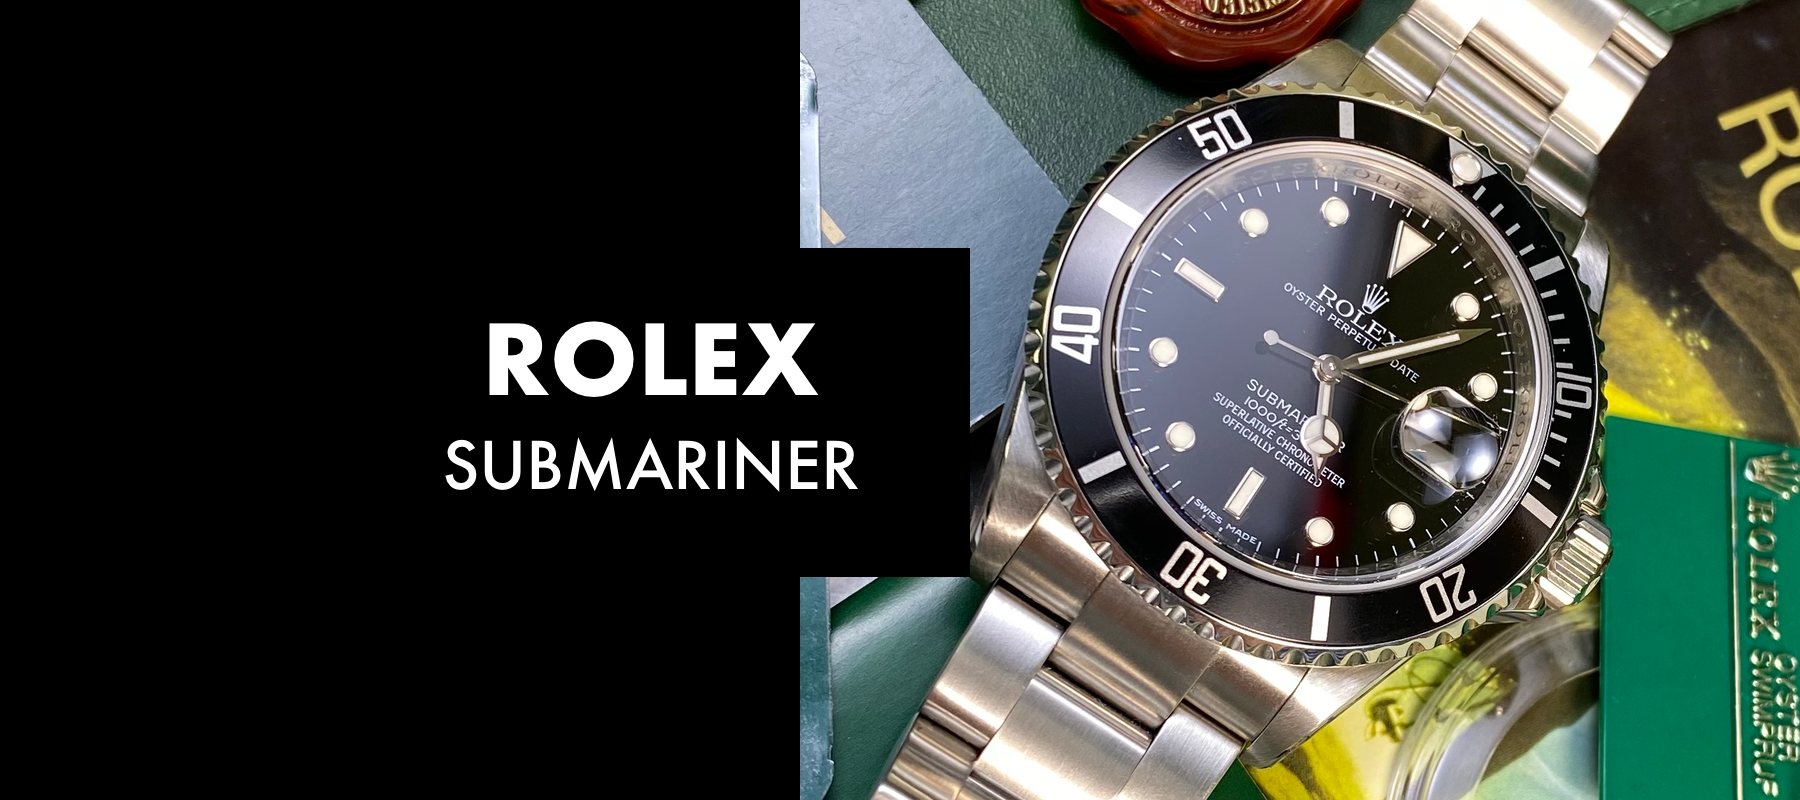 Rolex Submariner 116610 Super Case vs. Submariner 16800 Transitional 